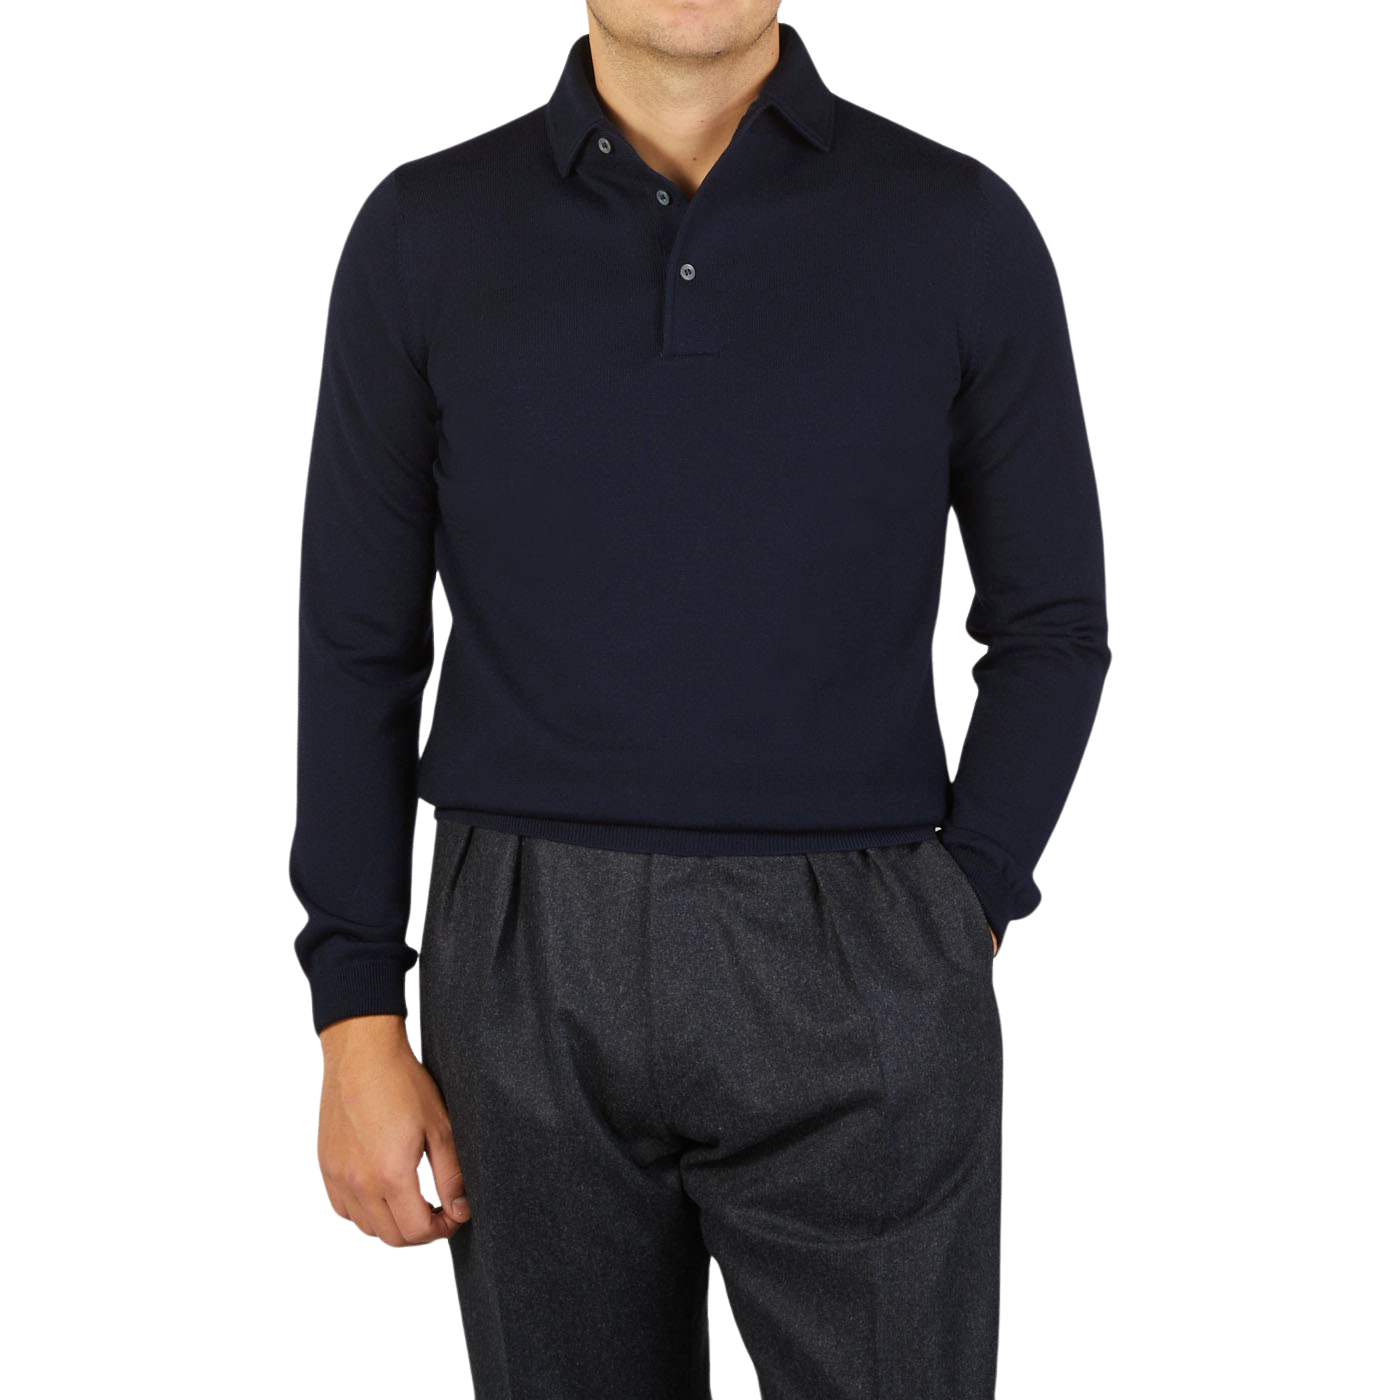 A man wearing a Gran Sasso Navy Merino Wool One-Piece Collar Polo Shirt and grey pants.